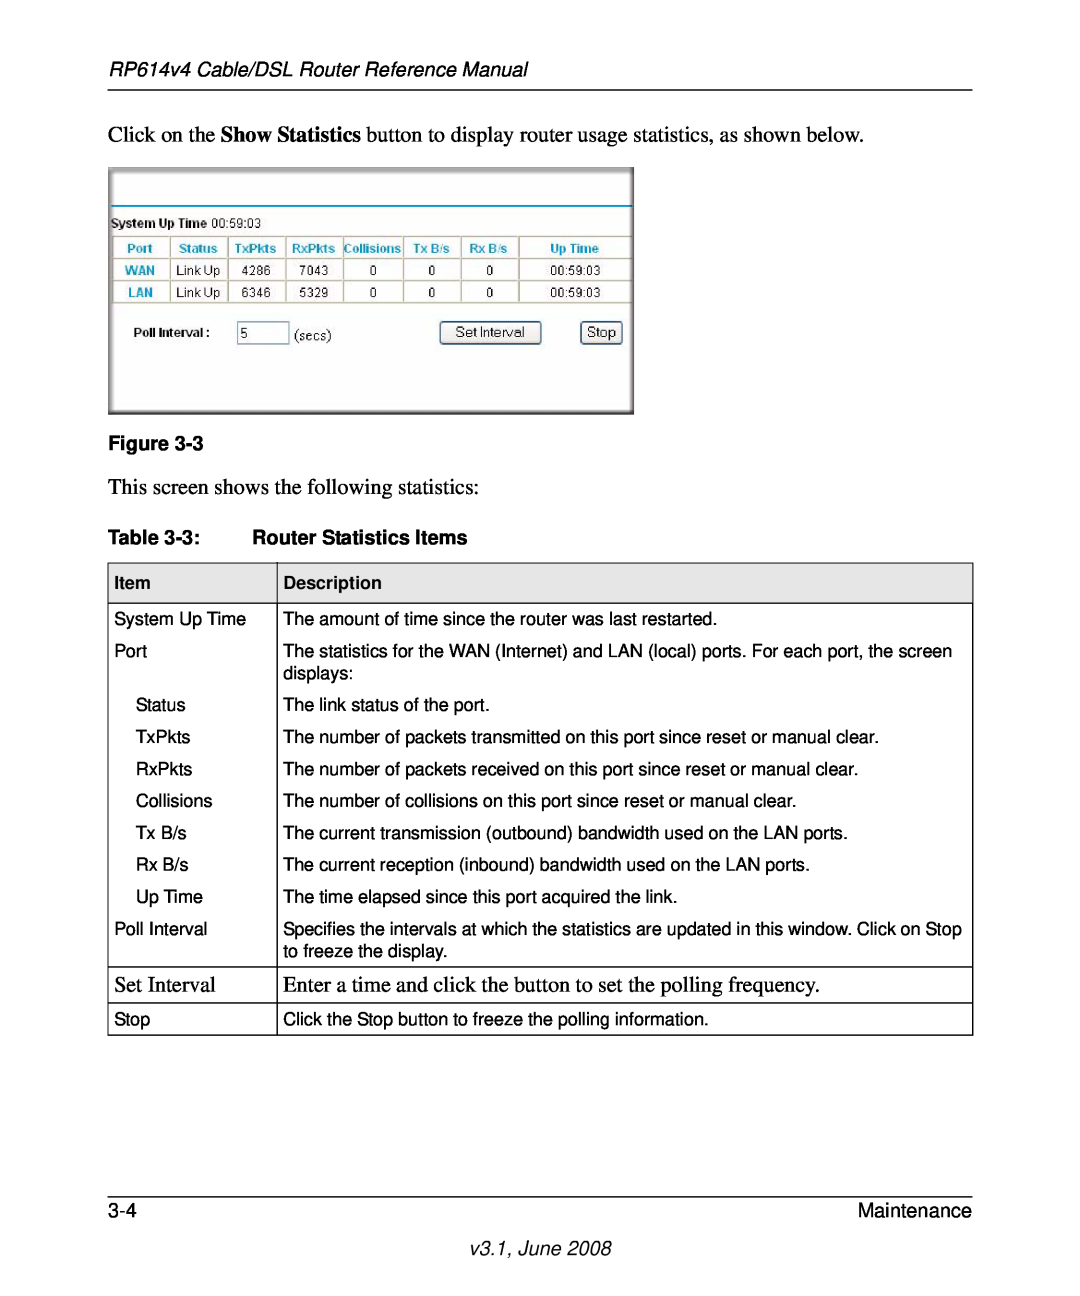 NETGEAR RP614 v4 manual RP614v4 Cable/DSL Router Reference Manual, Router Statistics Items, Maintenance, v3.1, June 